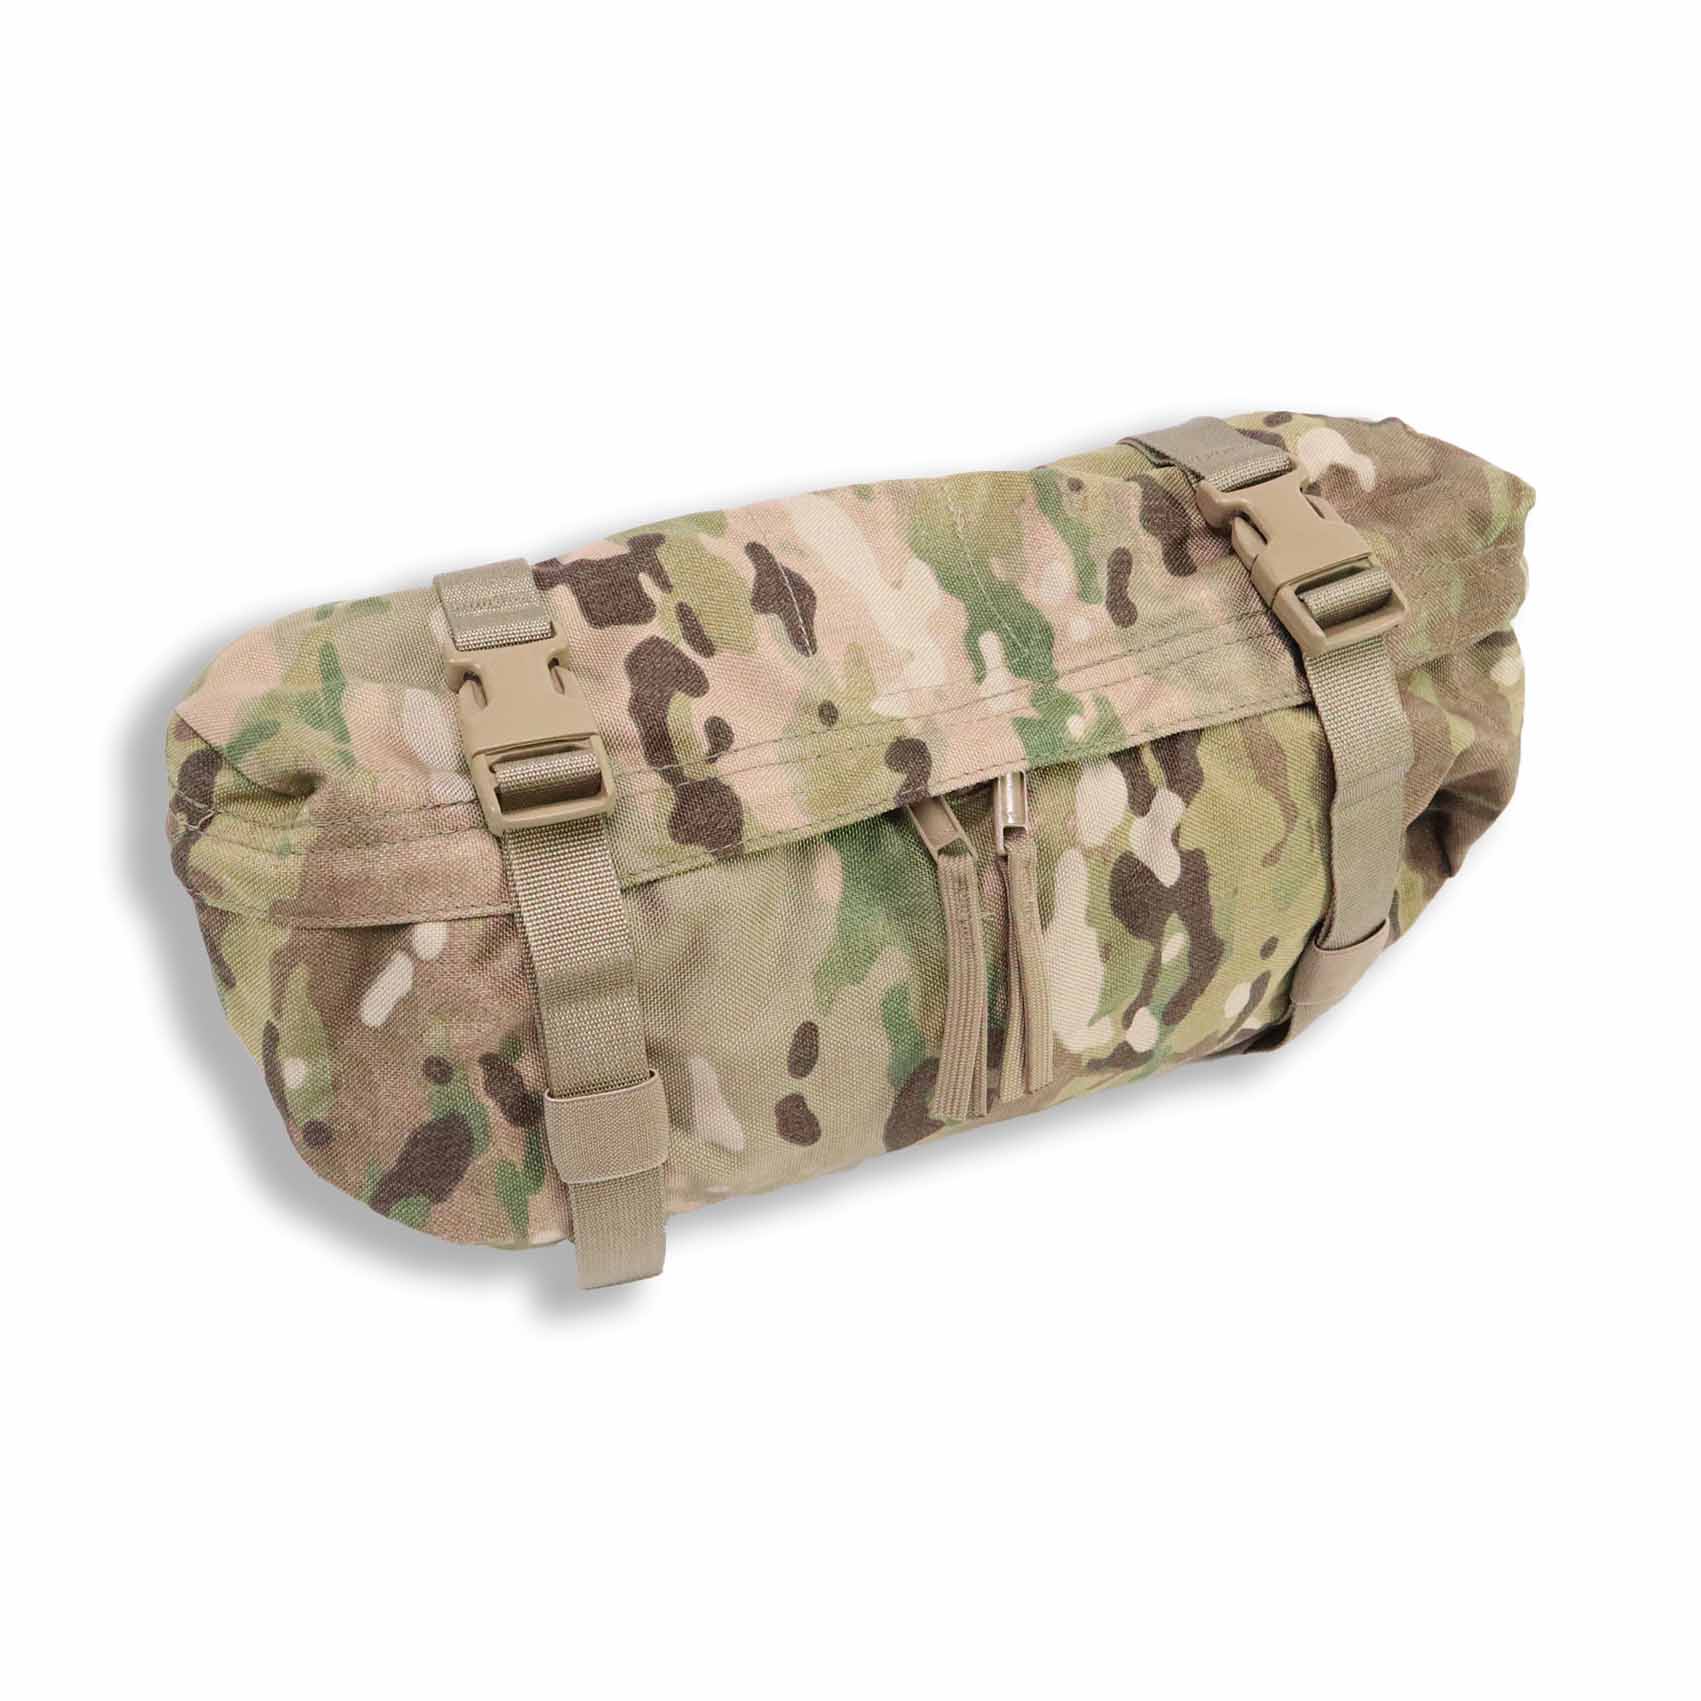 USGI US Army MOLLE II Waist Pack Pouch - Multicam (SURPLUS)